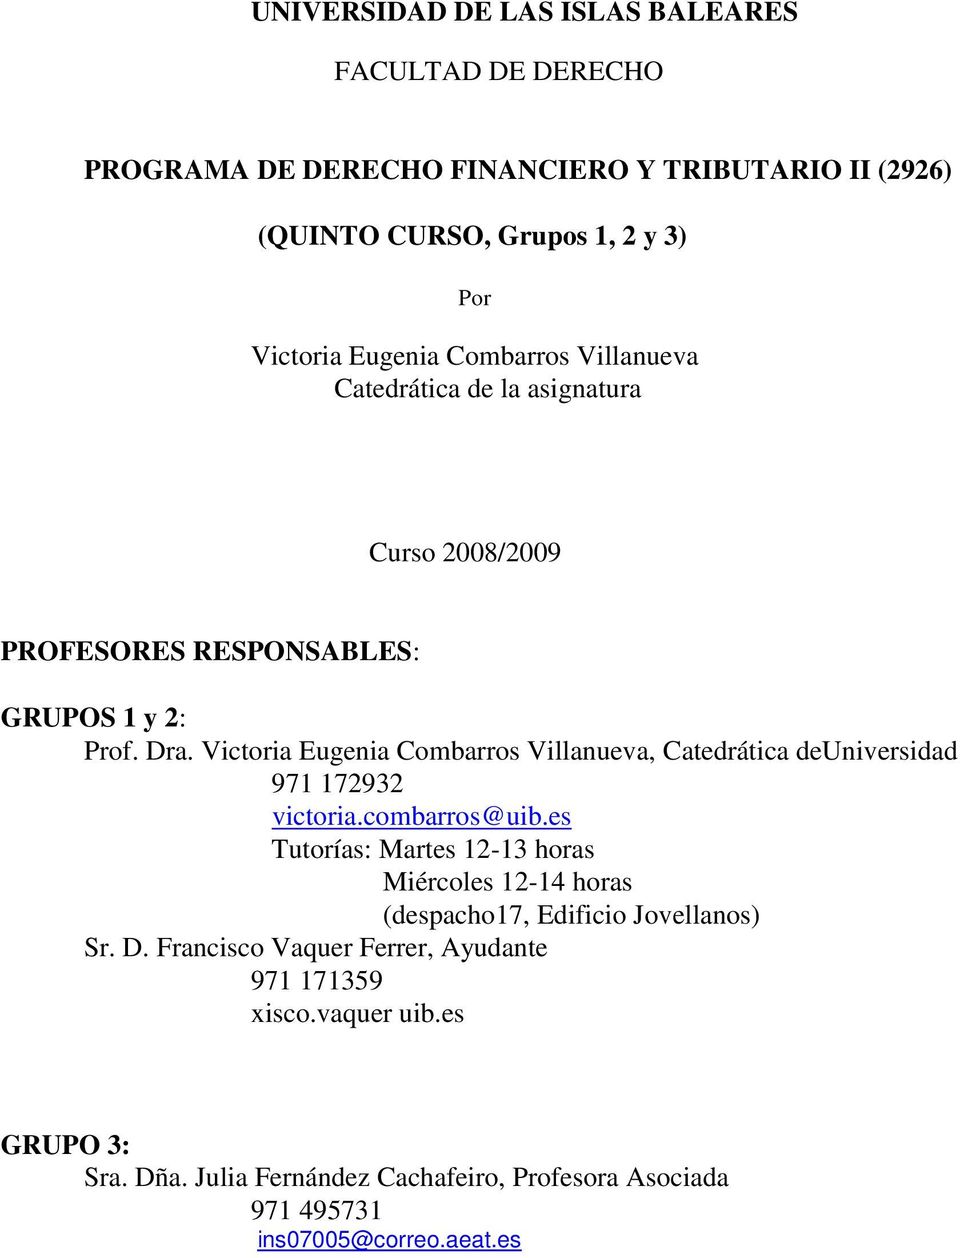 Victoria Eugenia Combarros Villanueva, Catedrática deuniversidad 971 172932 victoria.combarros@uib.